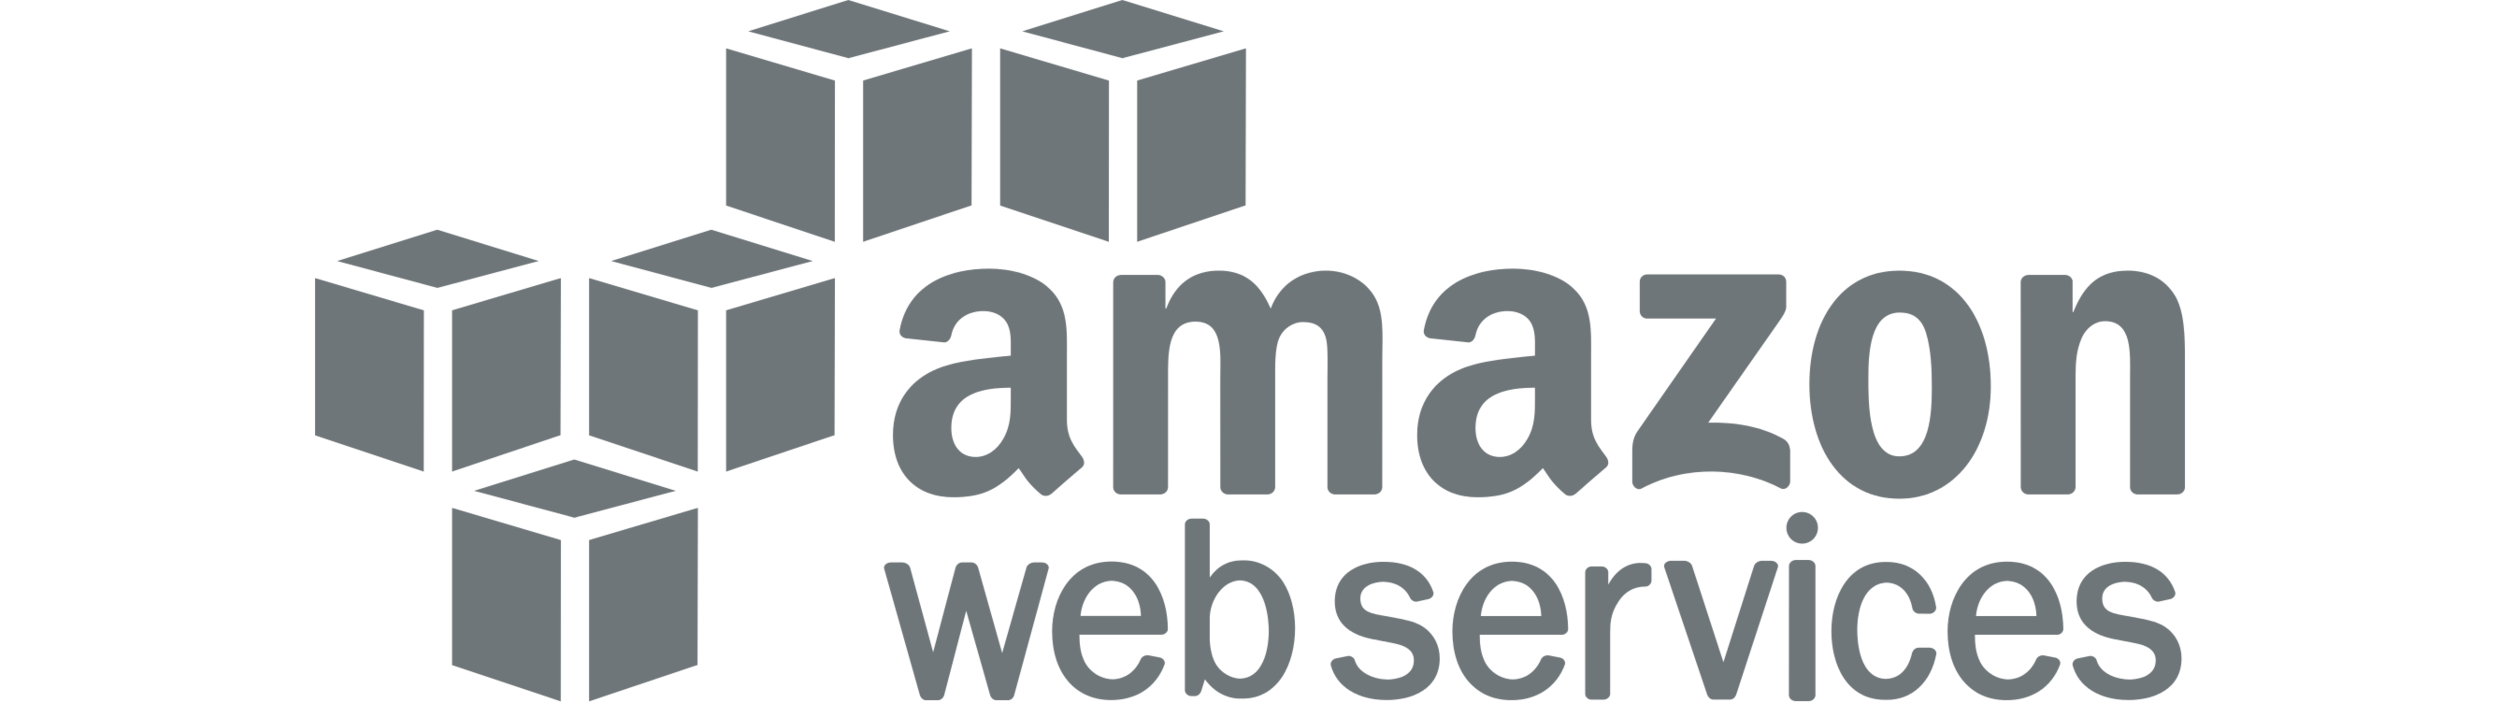 AmazonWebservices_Logo_grey.png